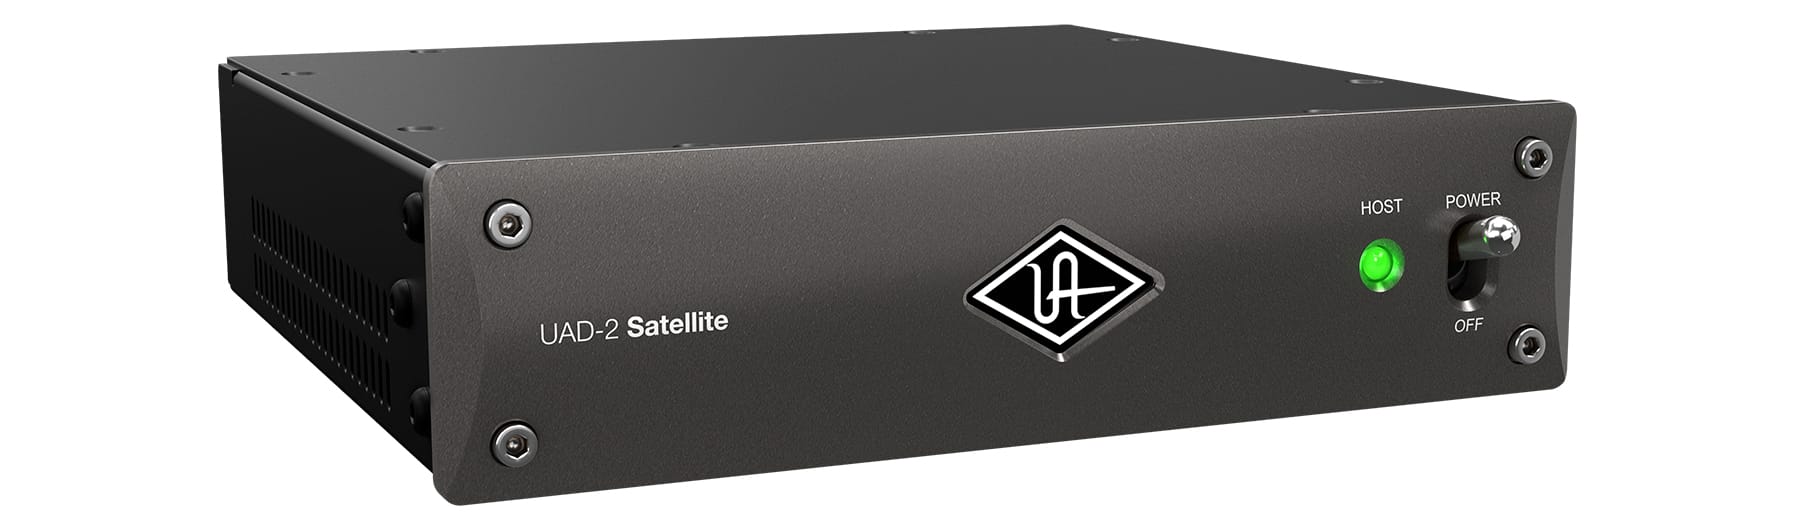 Universal Audio 2 Satellite Thunderbolt 3 Octa Core